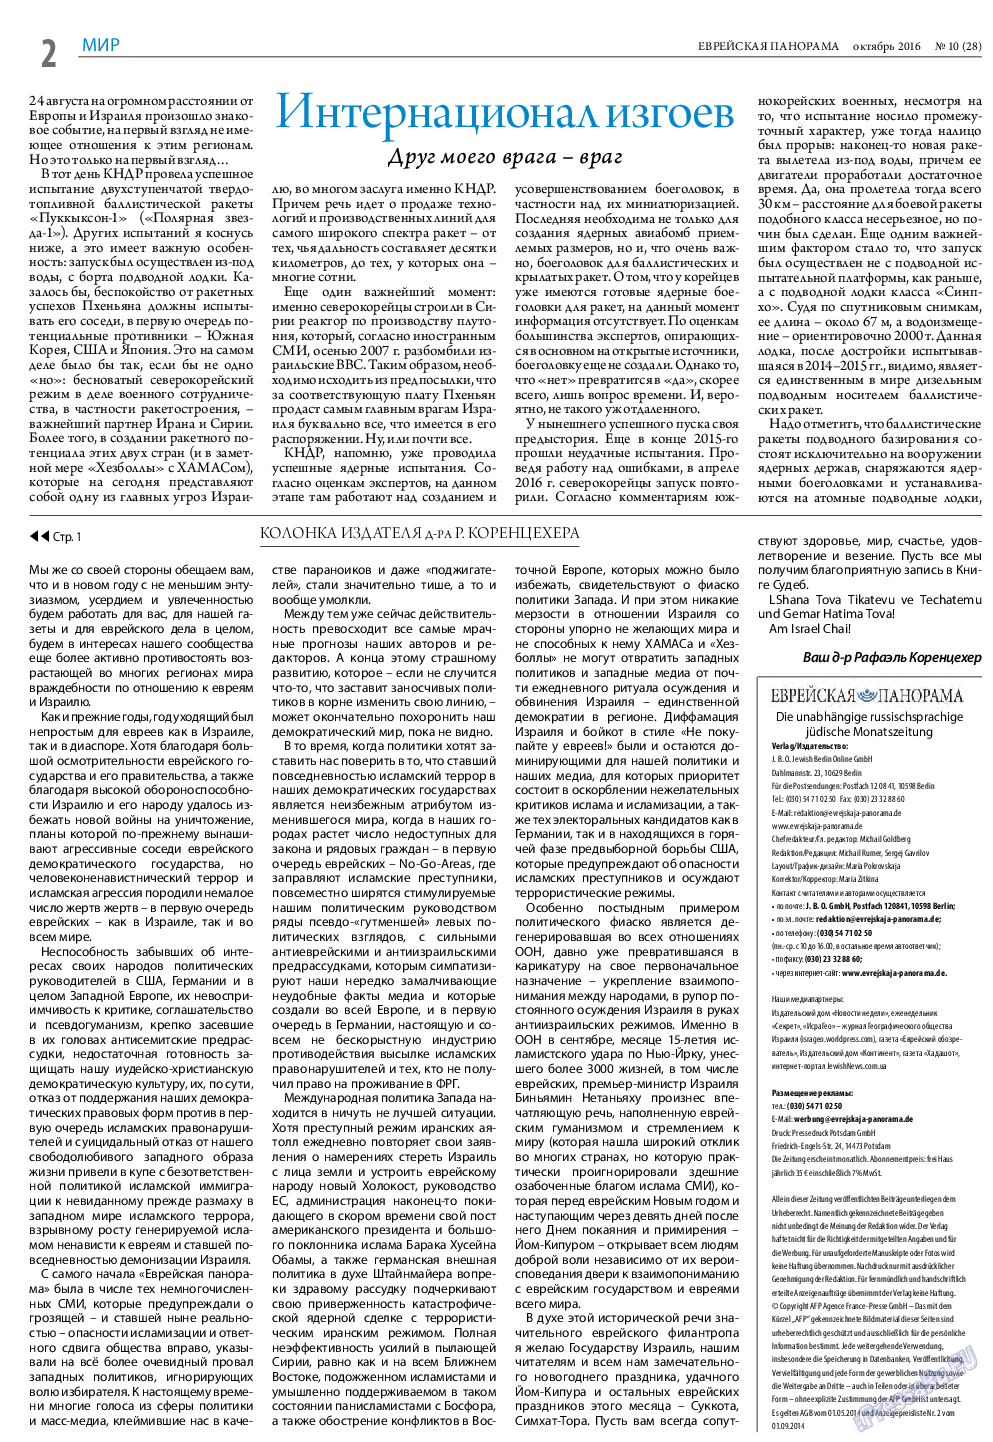 Еврейская панорама, газета. 2016 №10 стр.2